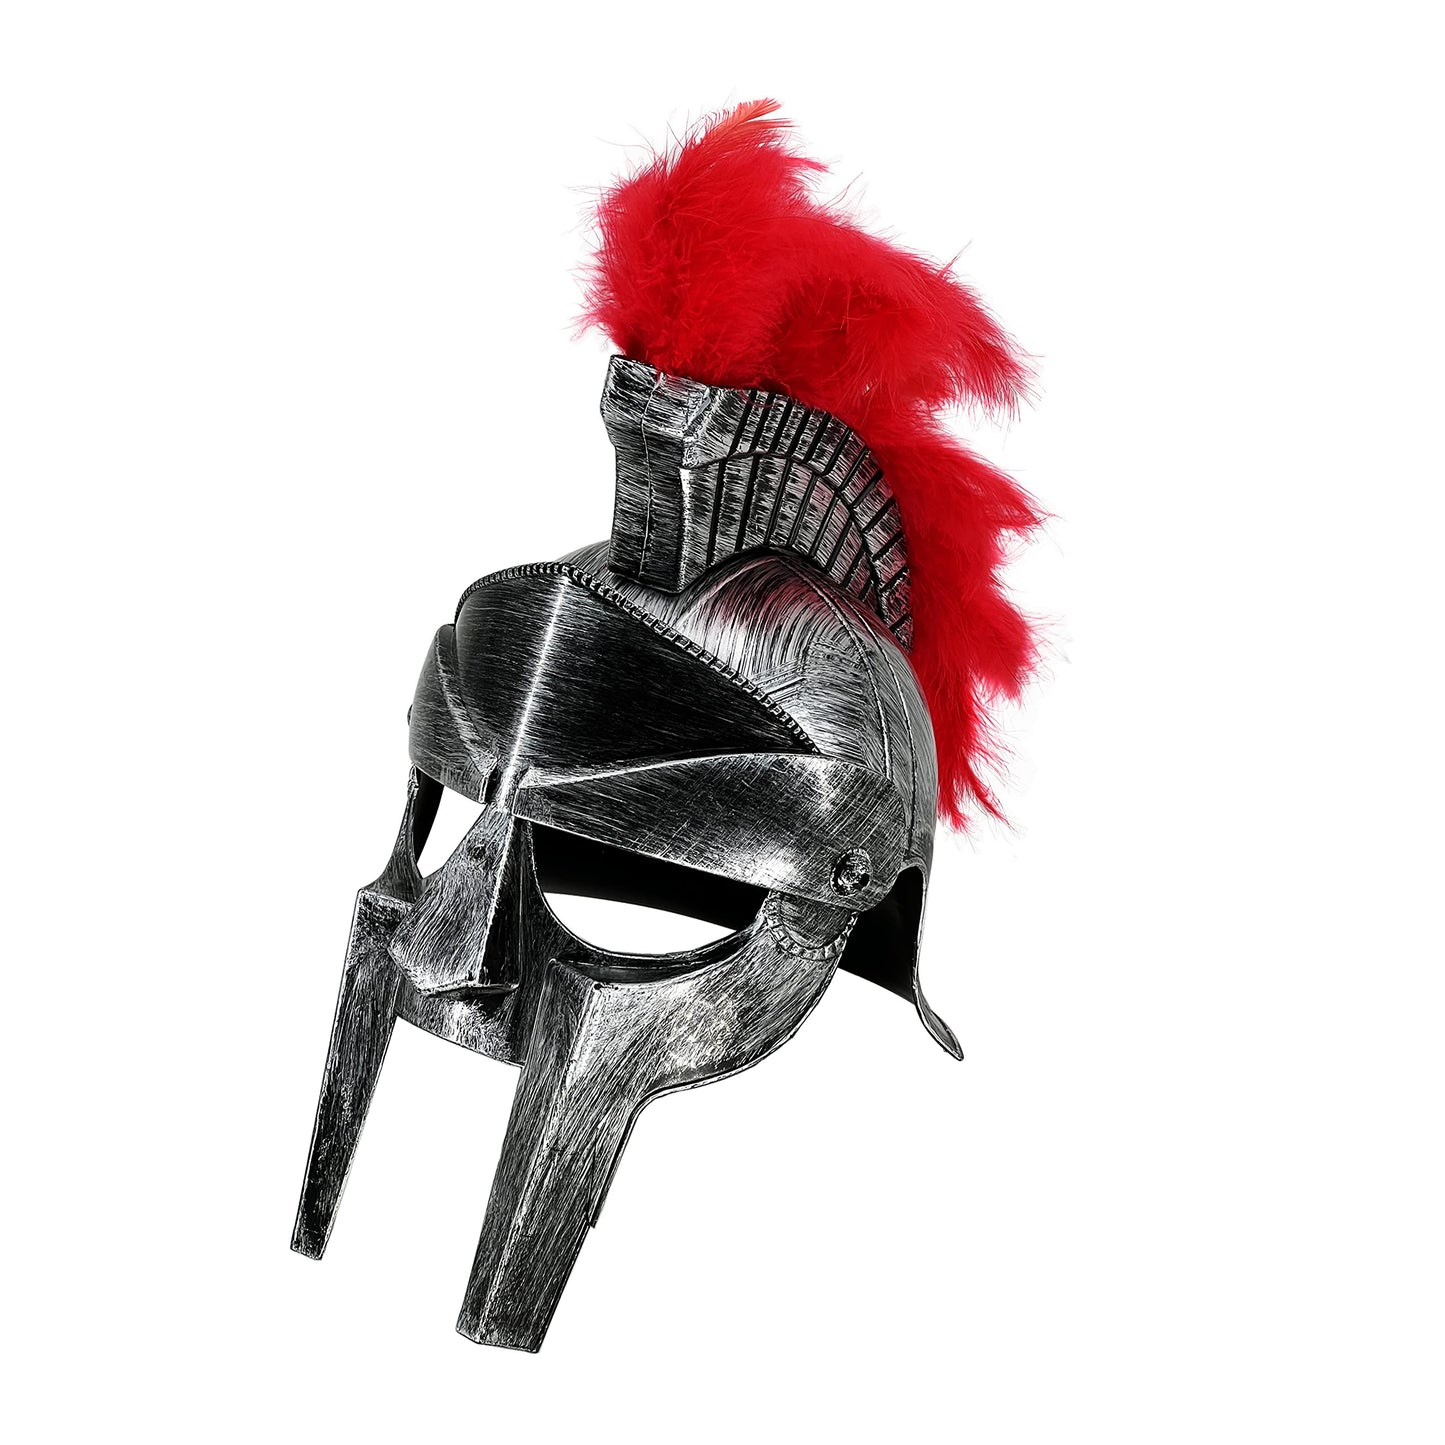 Ancient Roman Spartan Gladiator Helmet Costume Accessory for Battle Play Halloween Cosplay LARP Red Tassel